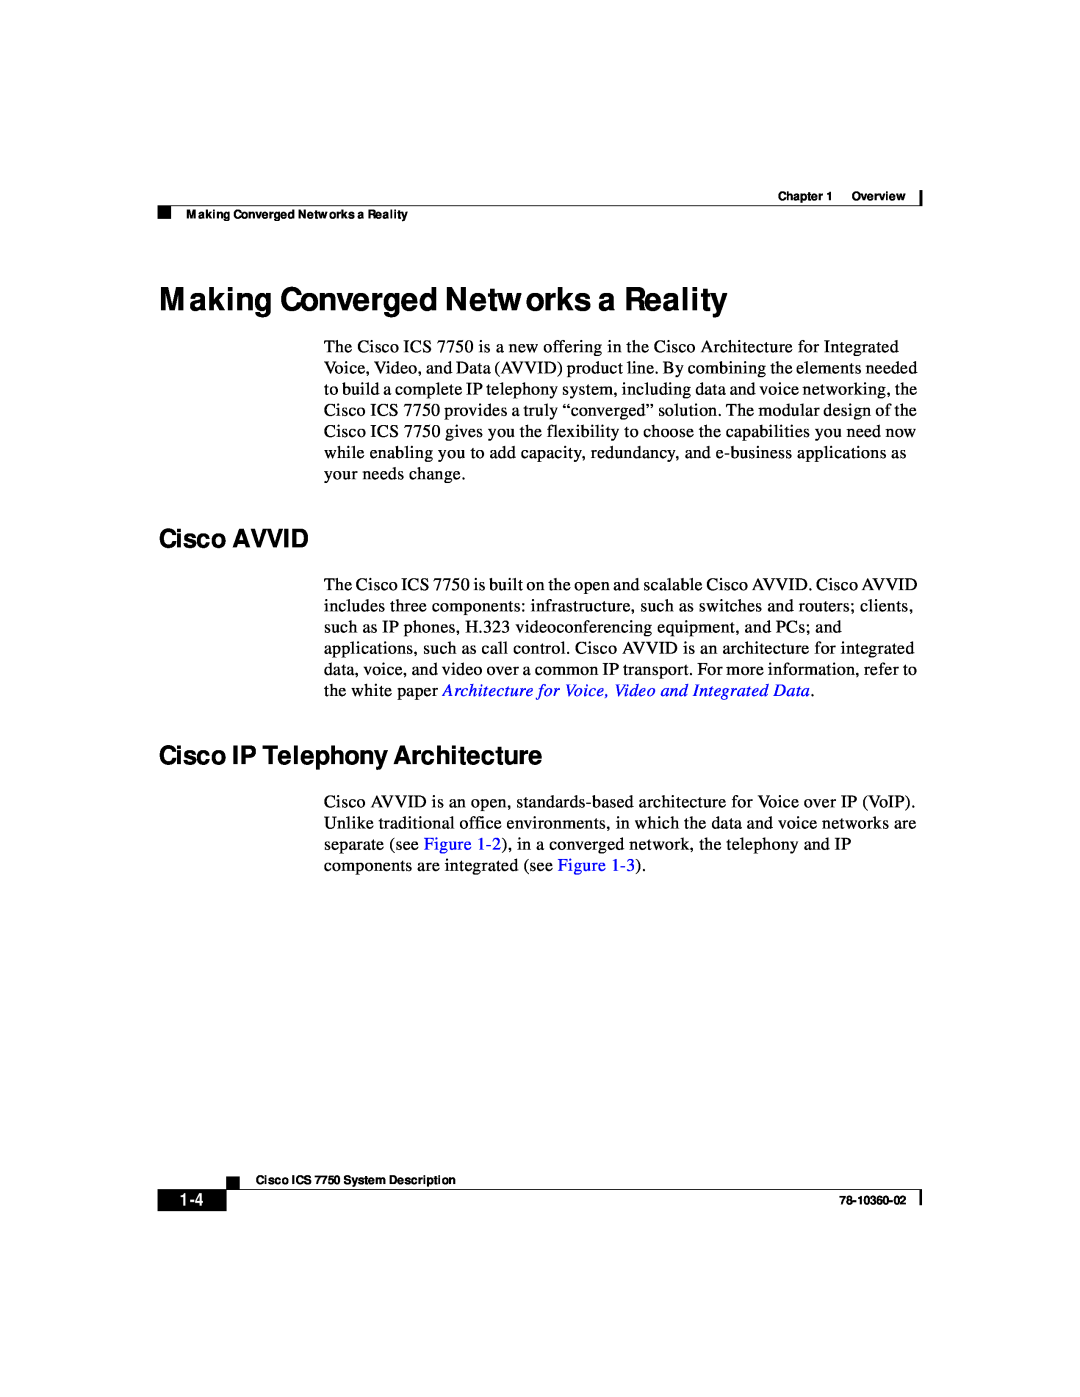 Cisco Systems ICS-7750 manual Making Converged Networks a Reality, Cisco AVVID, Cisco IP Telephony Architecture 